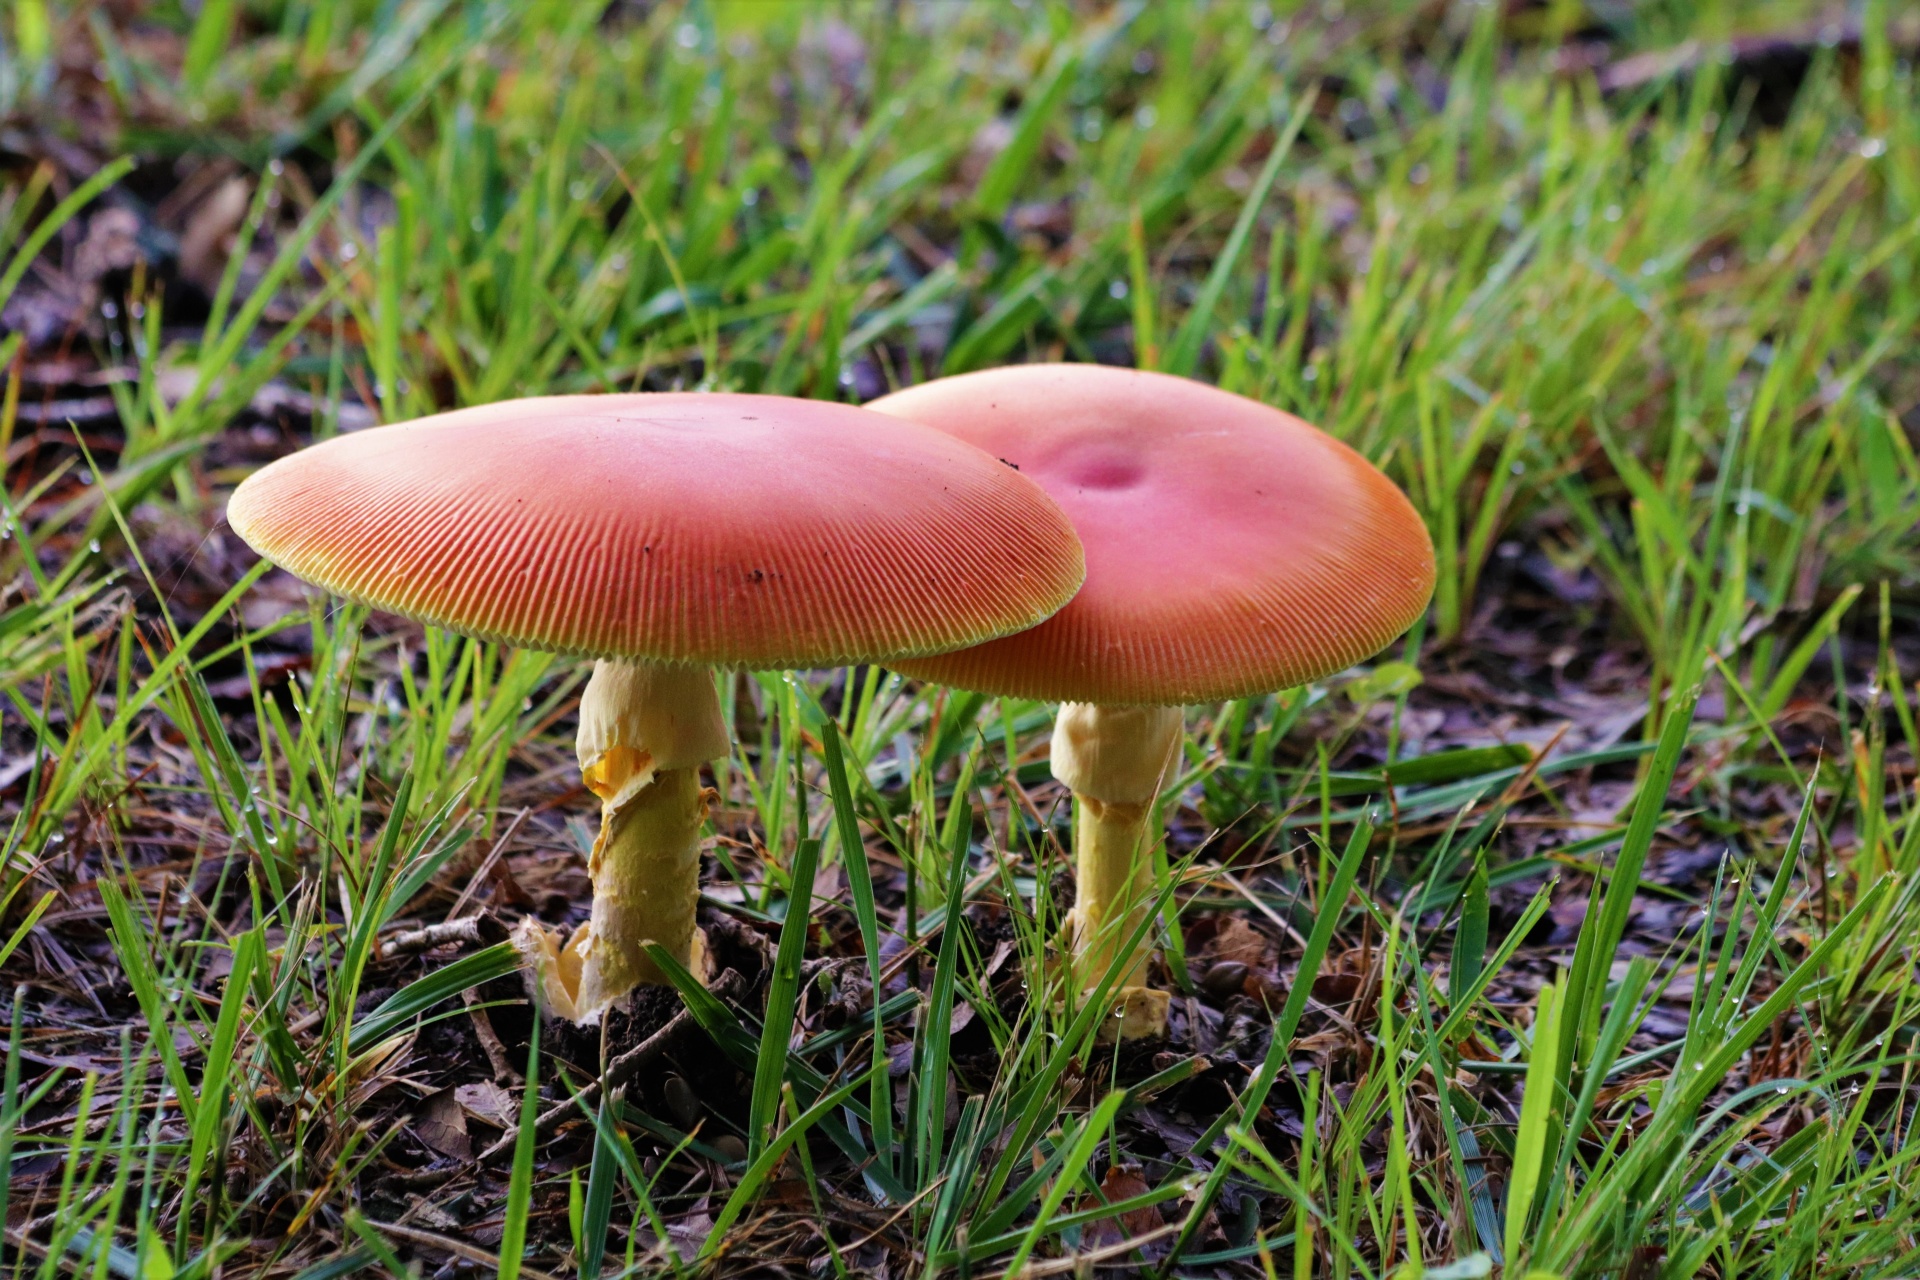 Two Orange Mushrooms In Grass